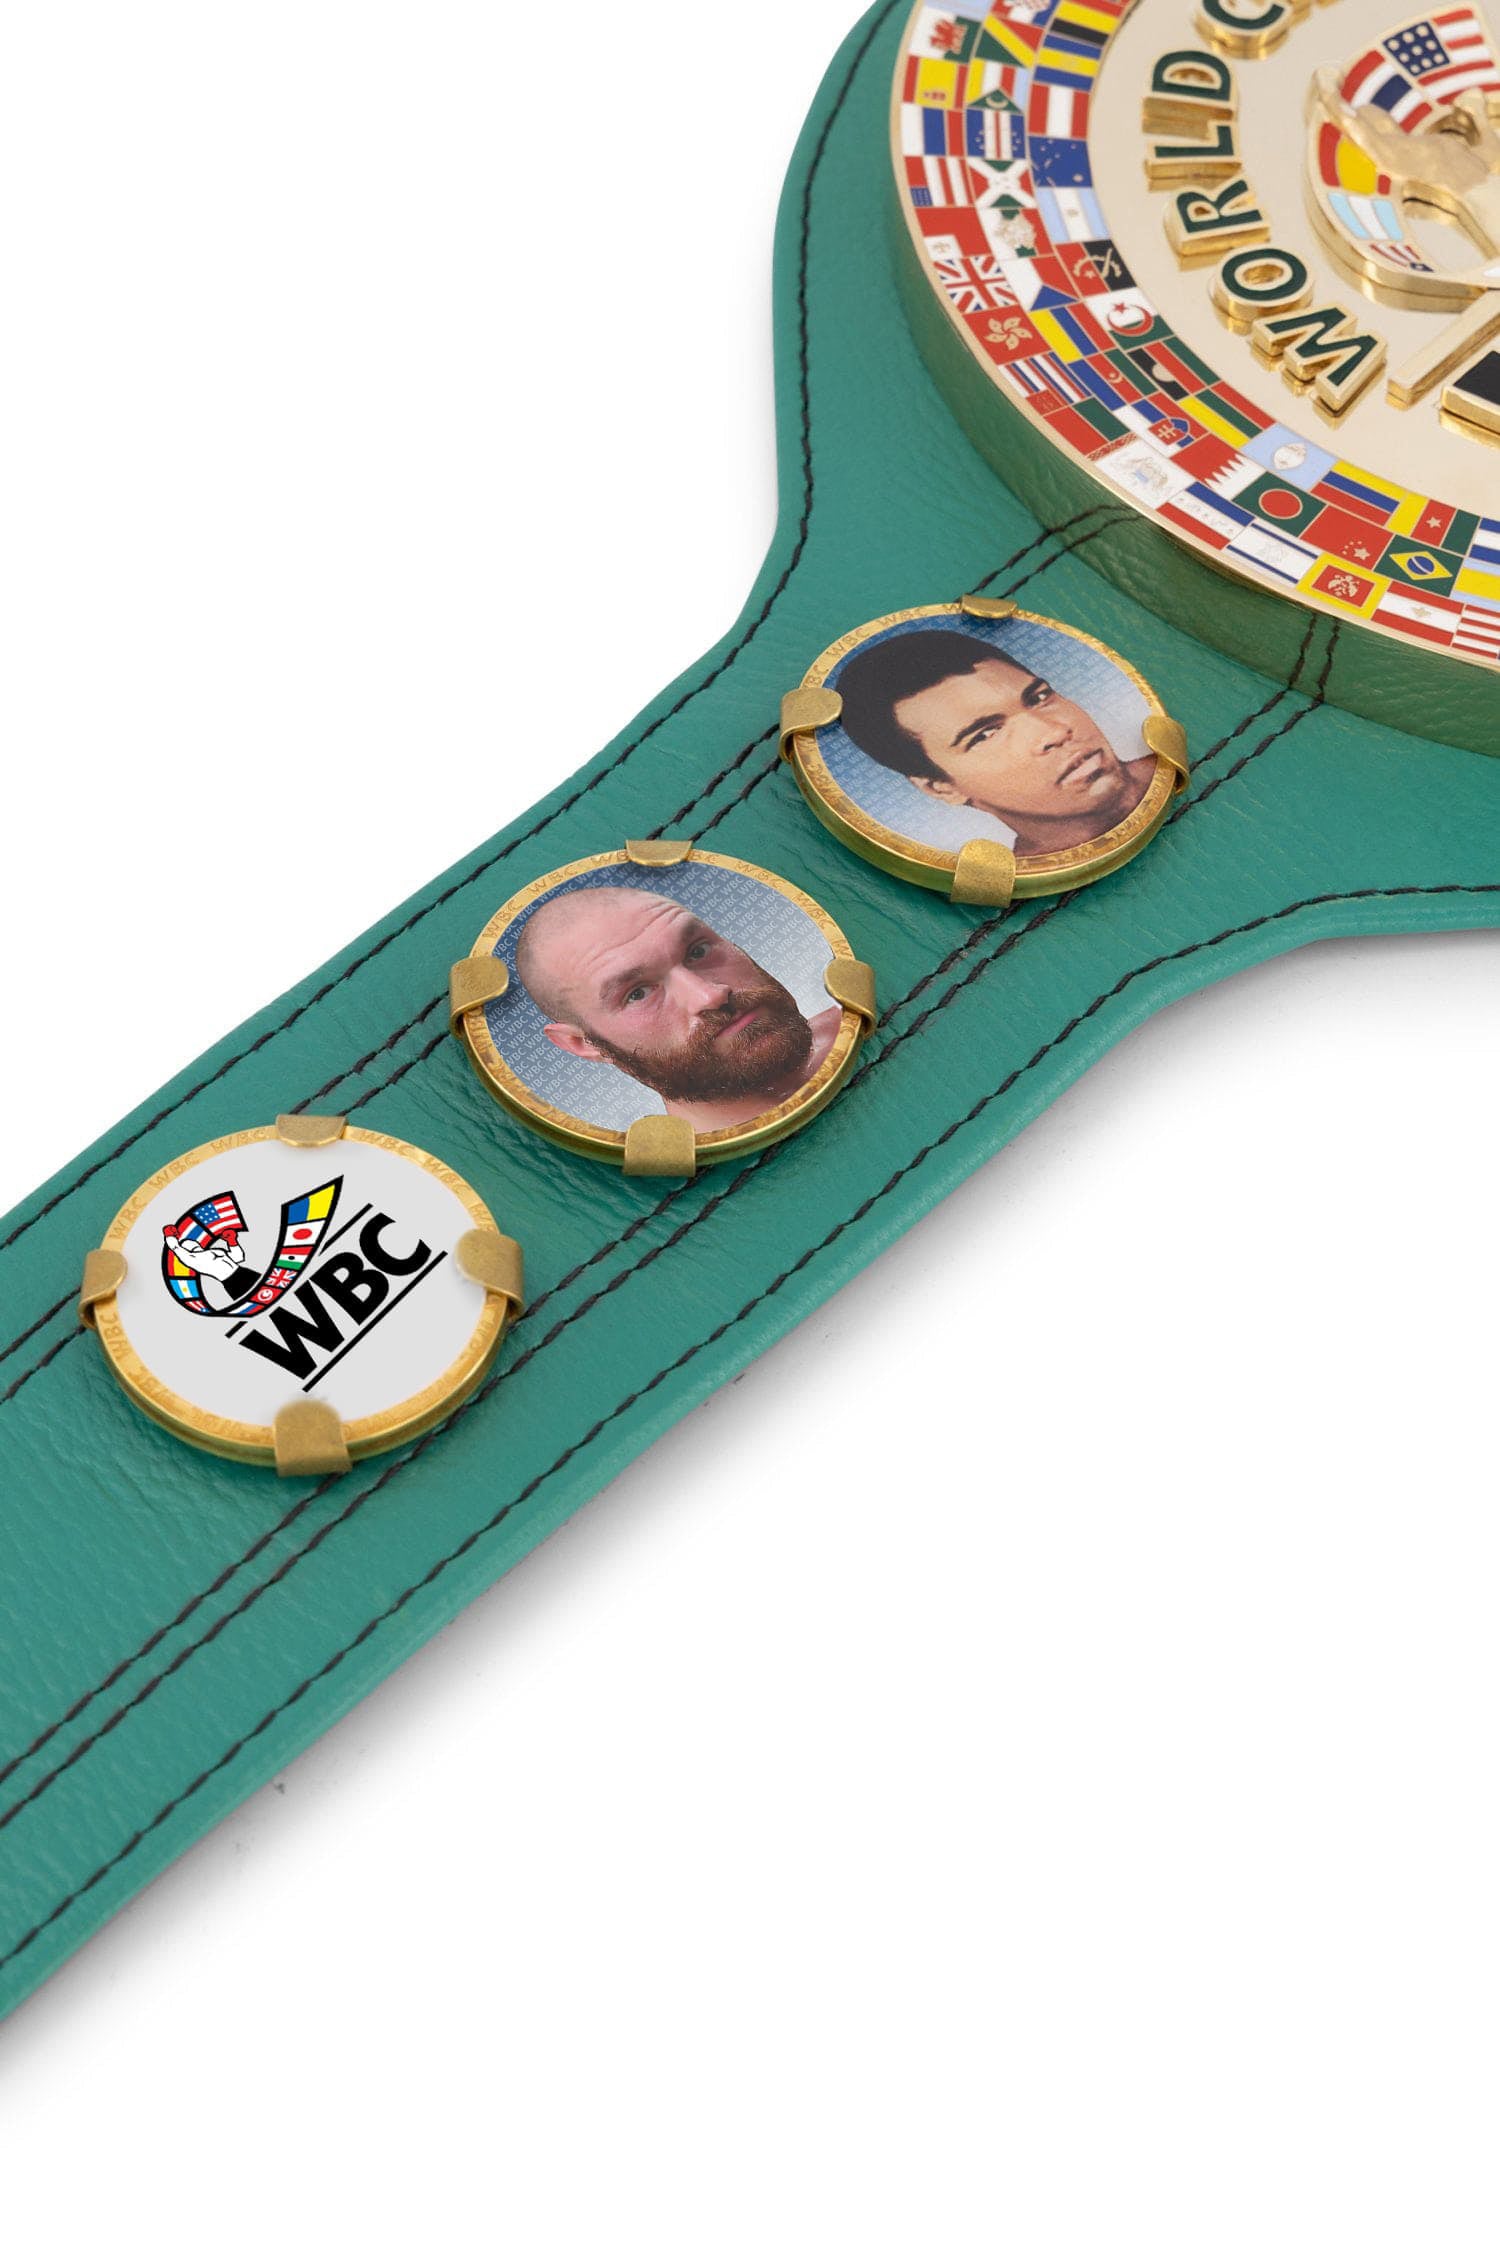 WBC Store Replica Belts WBC Championship Belt  "Historic Fights" Tyson Fury vs. Deontay Wilder